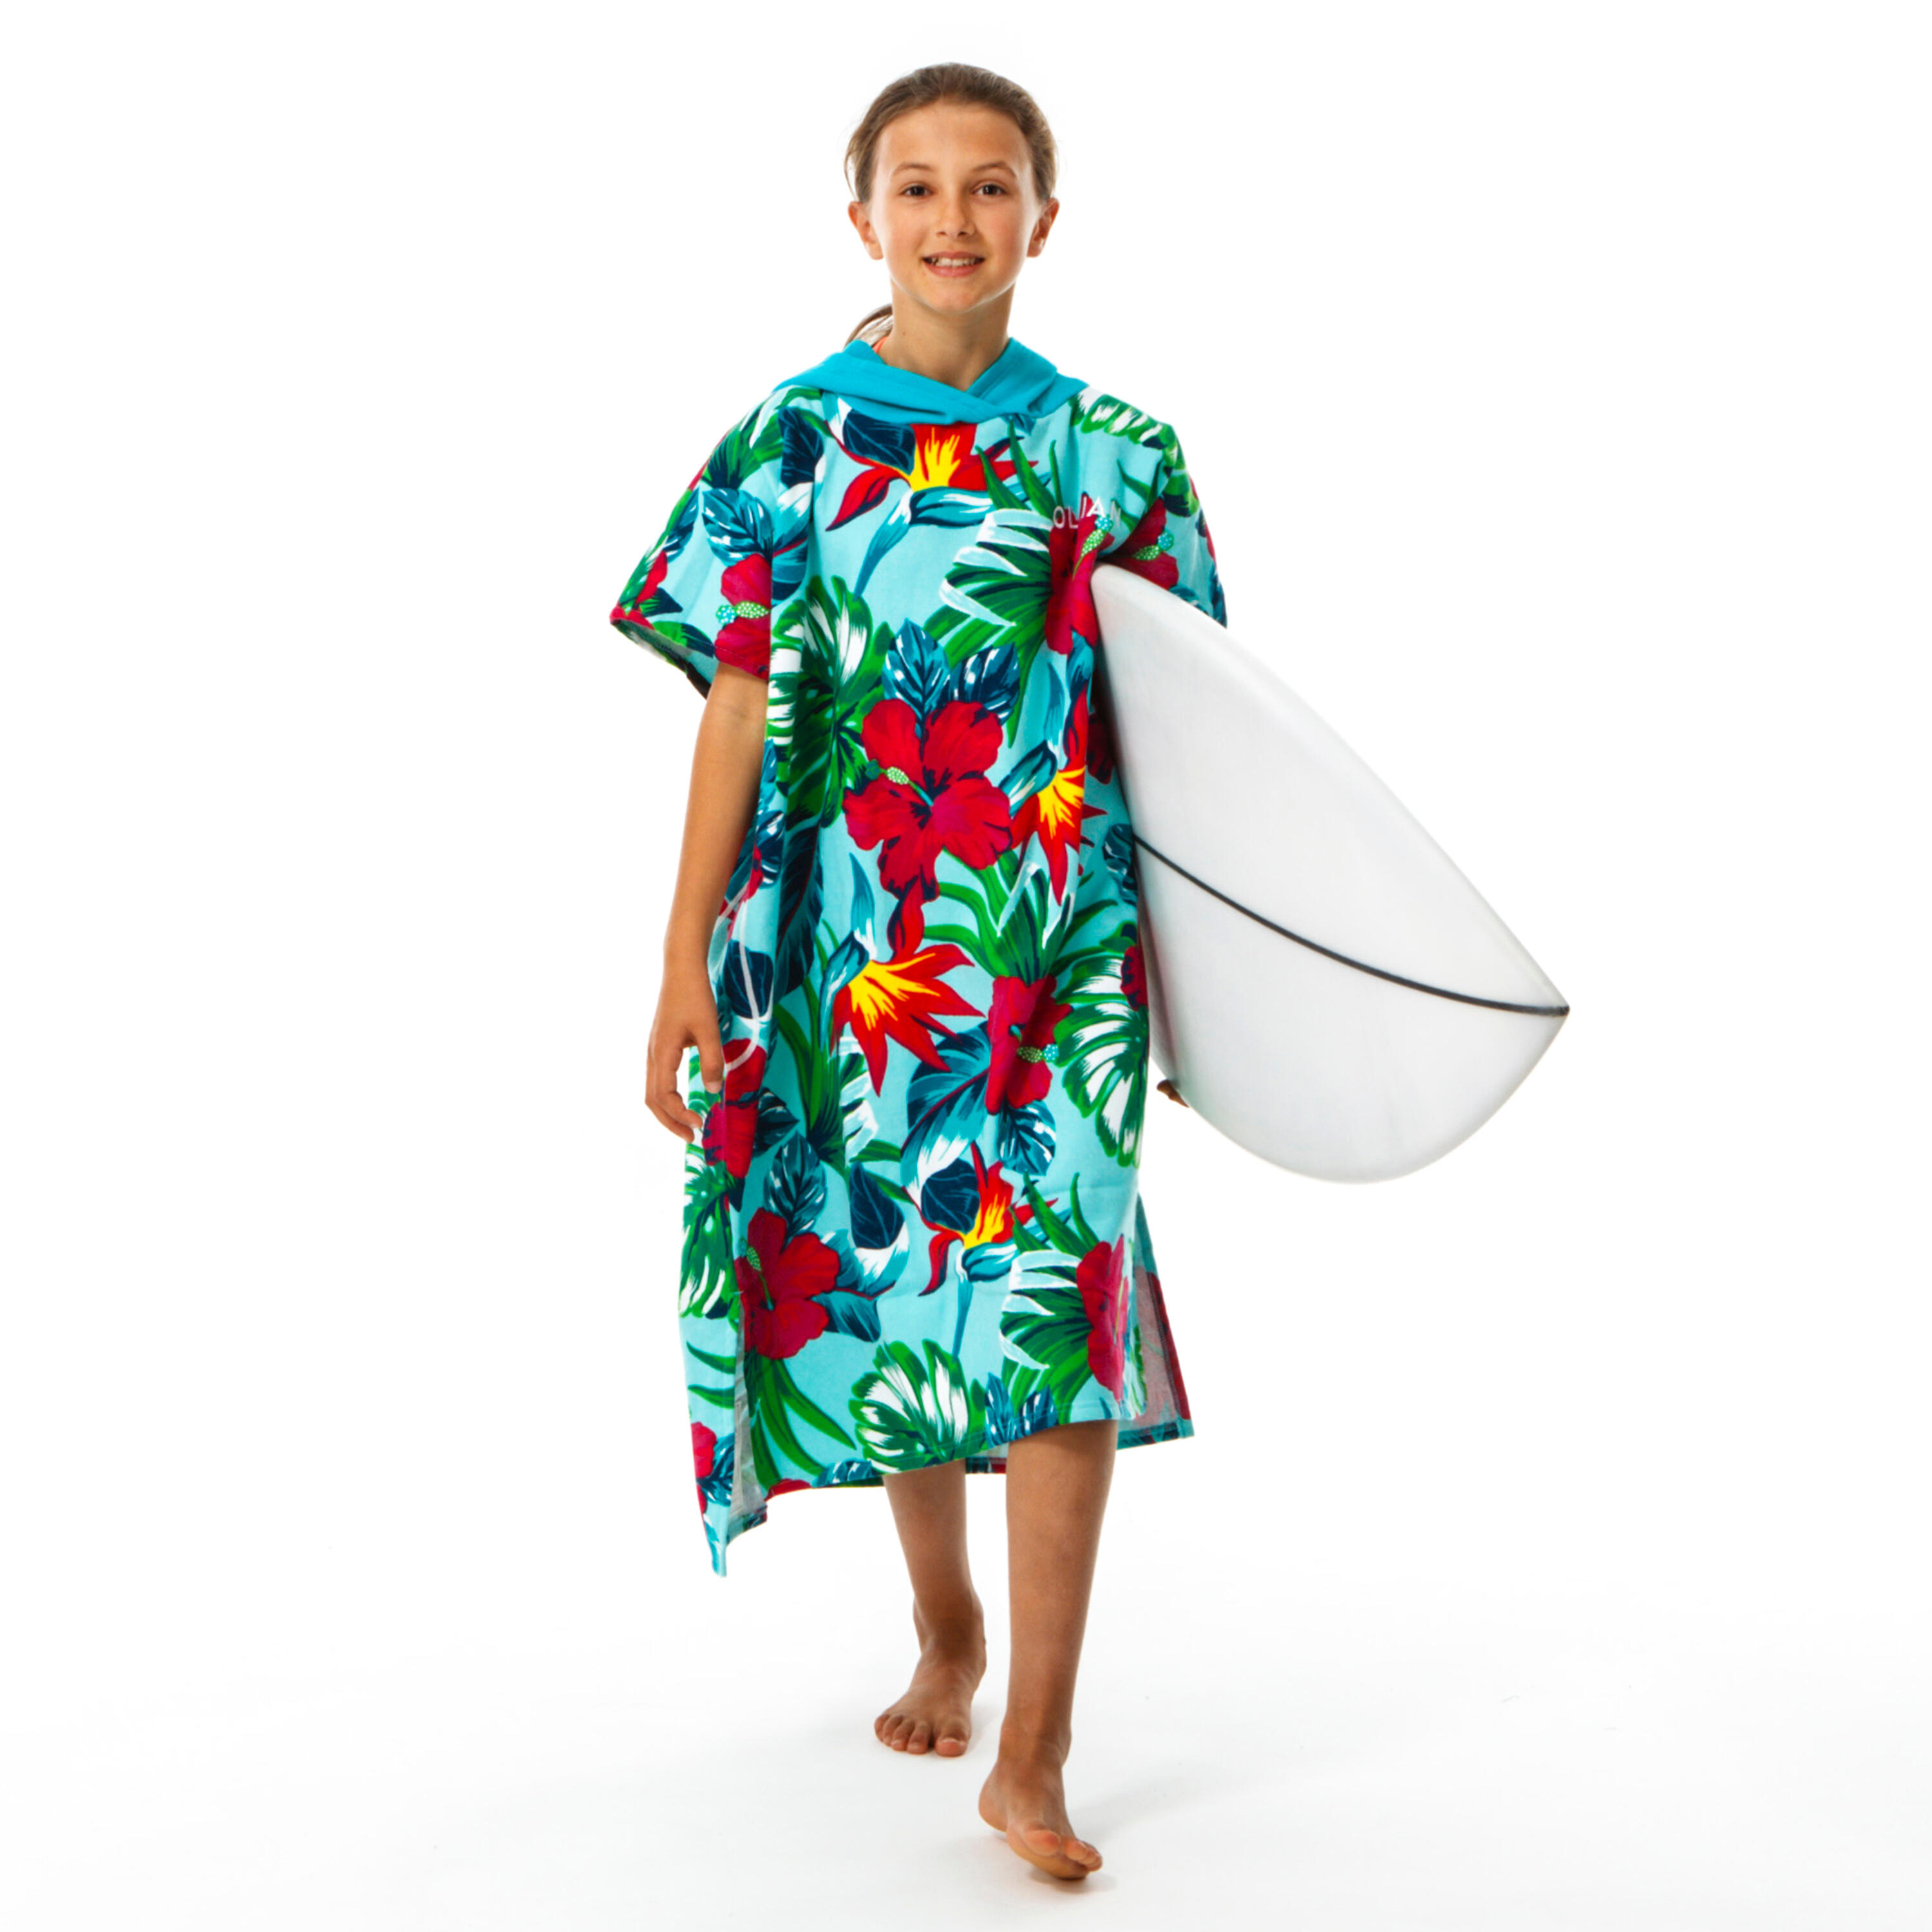 OLAIAN Kids' Surf Poncho 550 (135 to 160 cm) - Bora